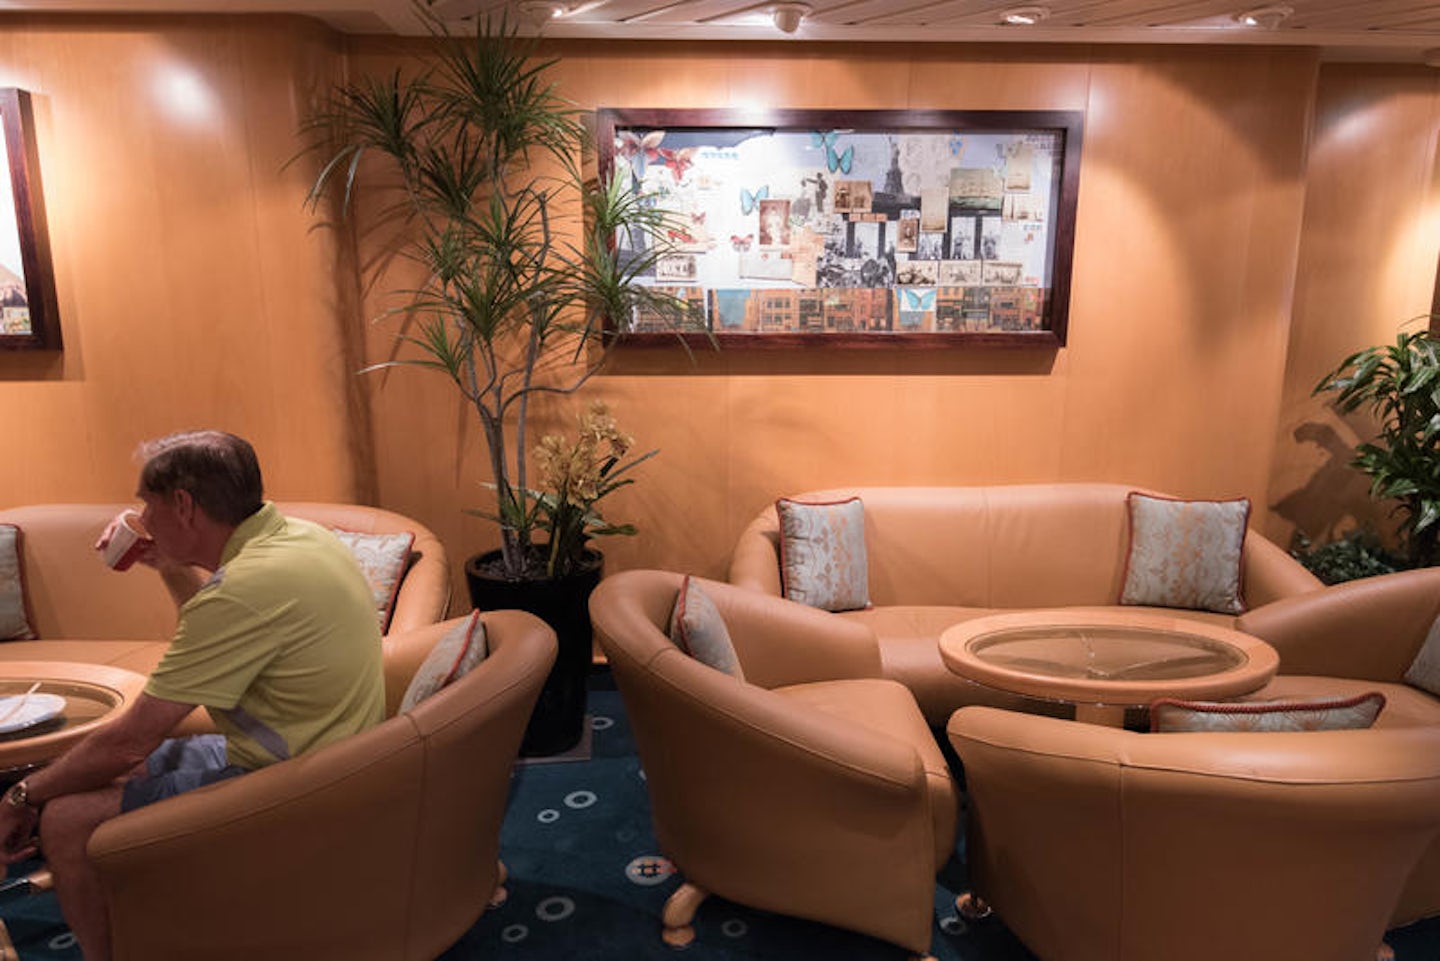 Concierge Club on Freedom of the Seas